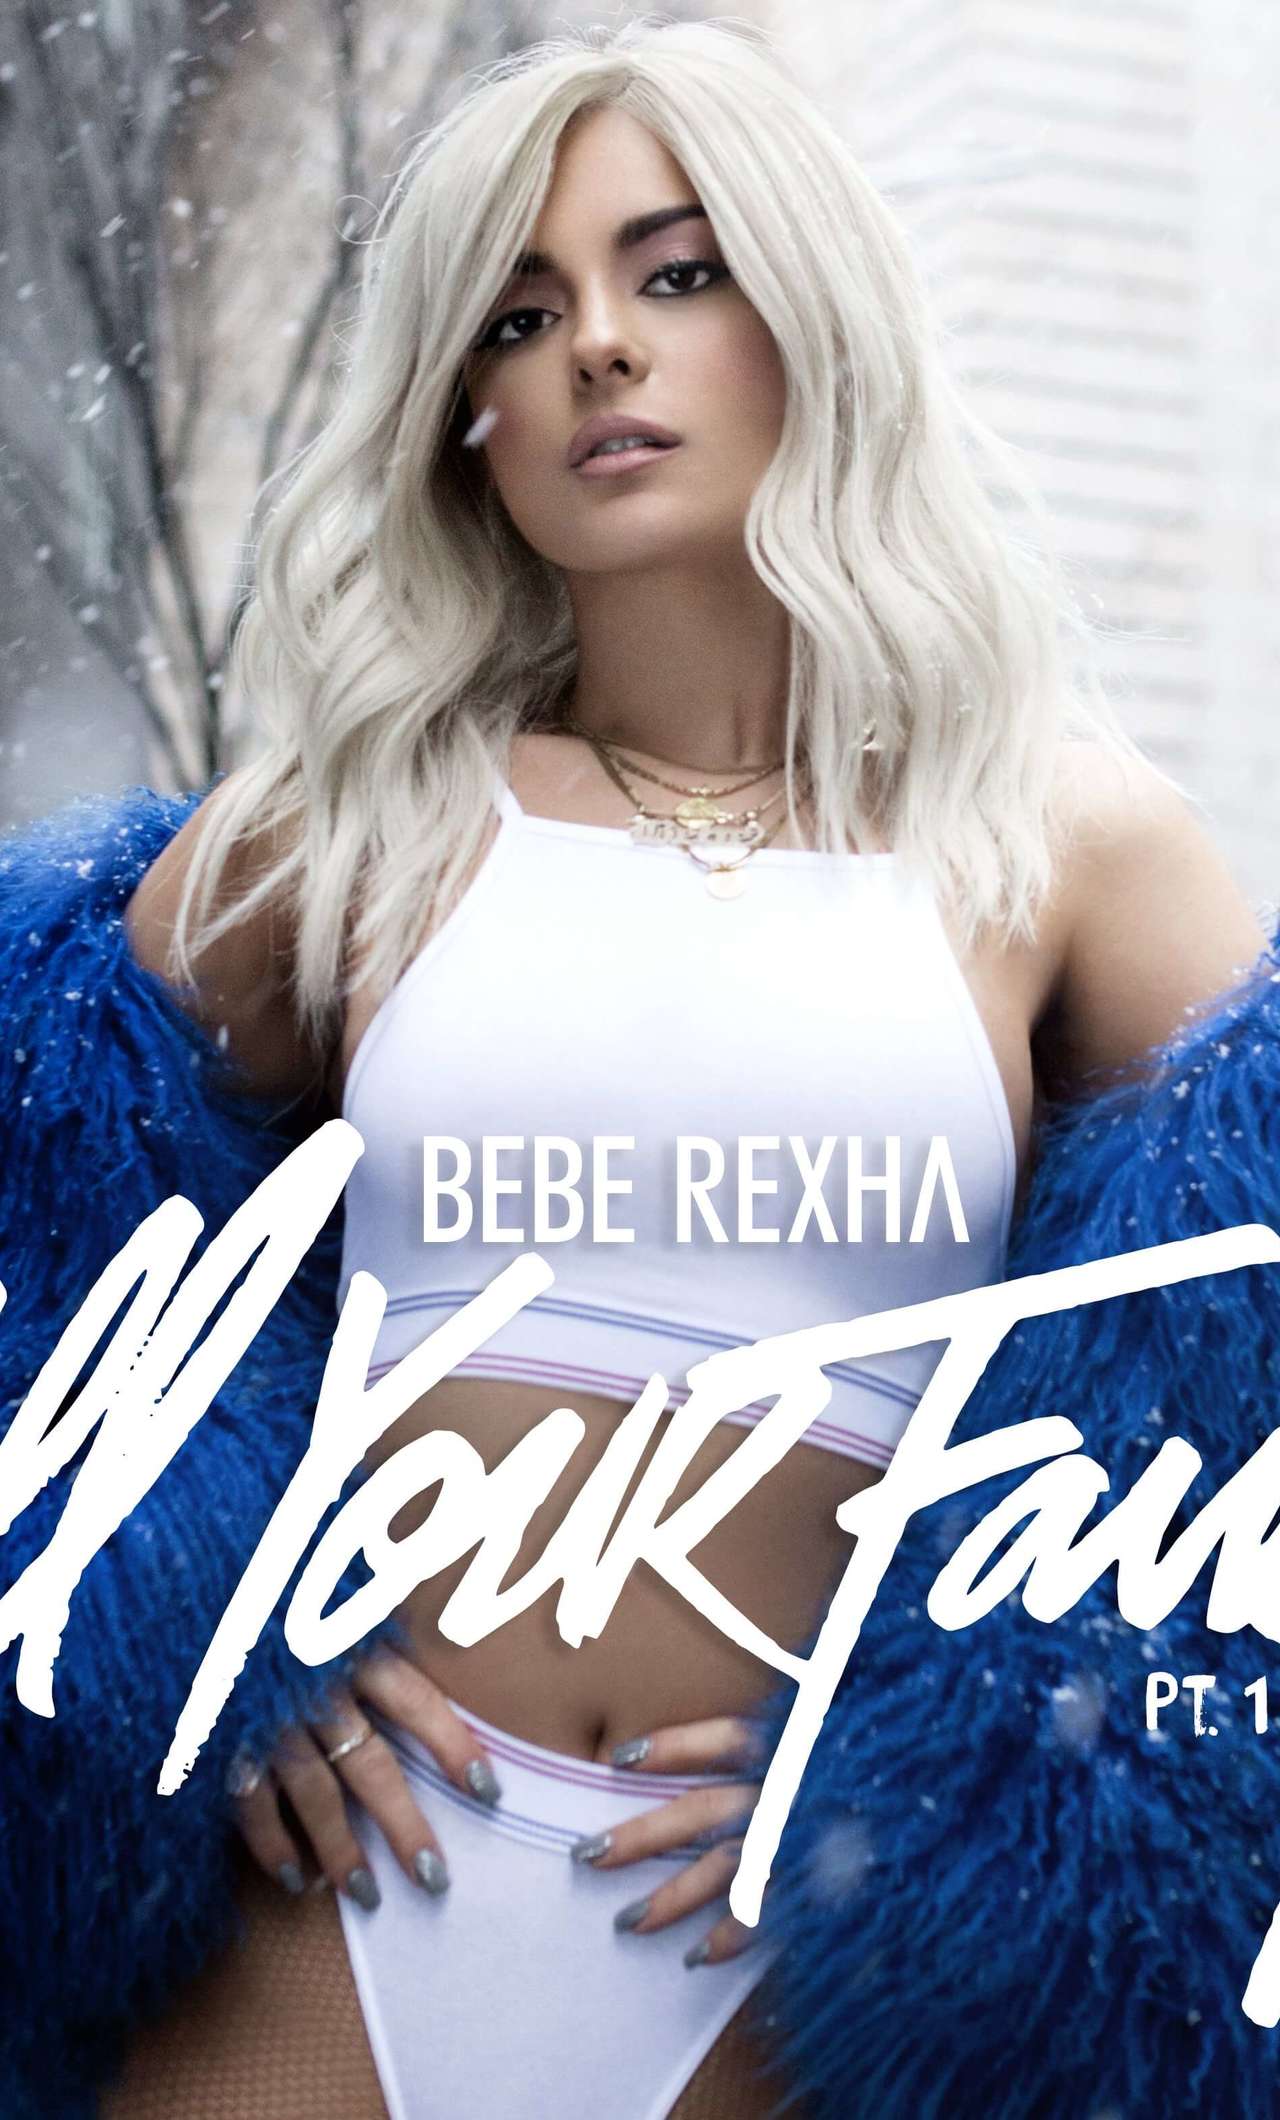 Bebe Rexha iPhone Wallpaper Rexha All Your Fault Pt 1